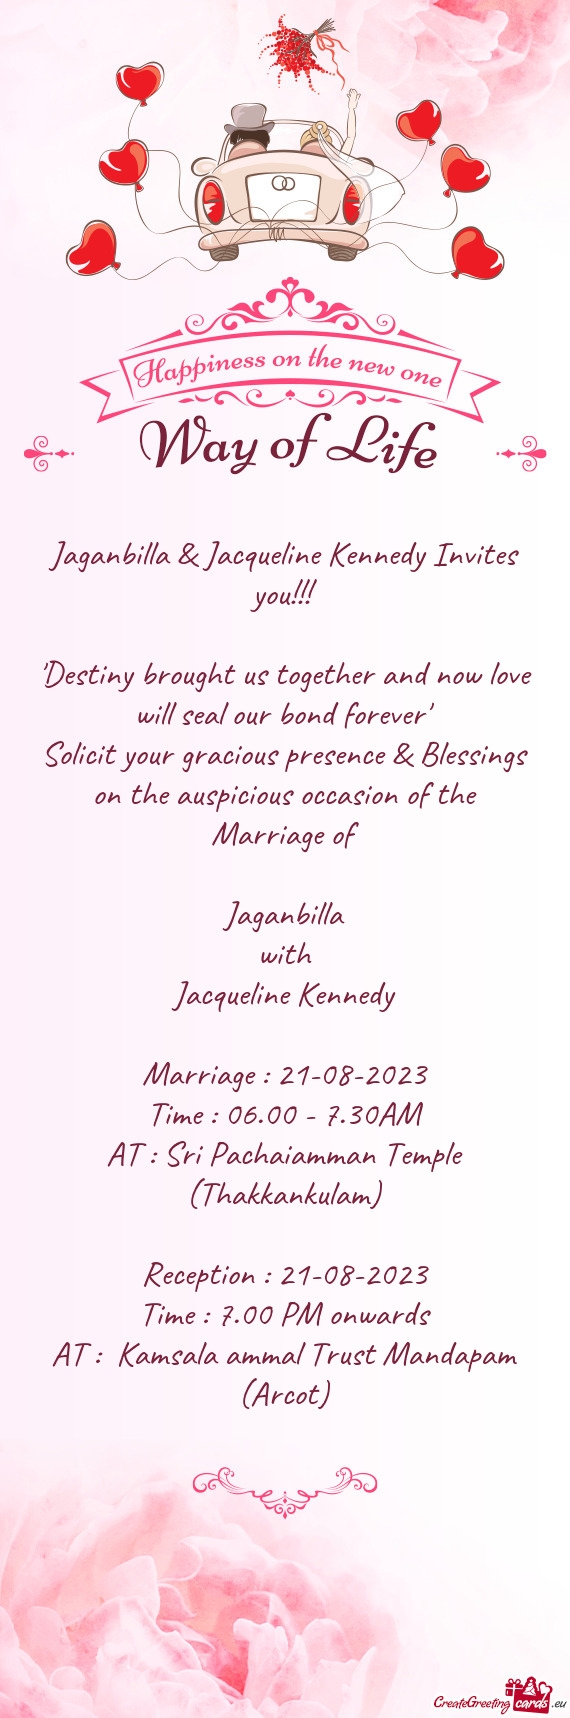 Jaganbilla & Jacqueline Kennedy Invites you